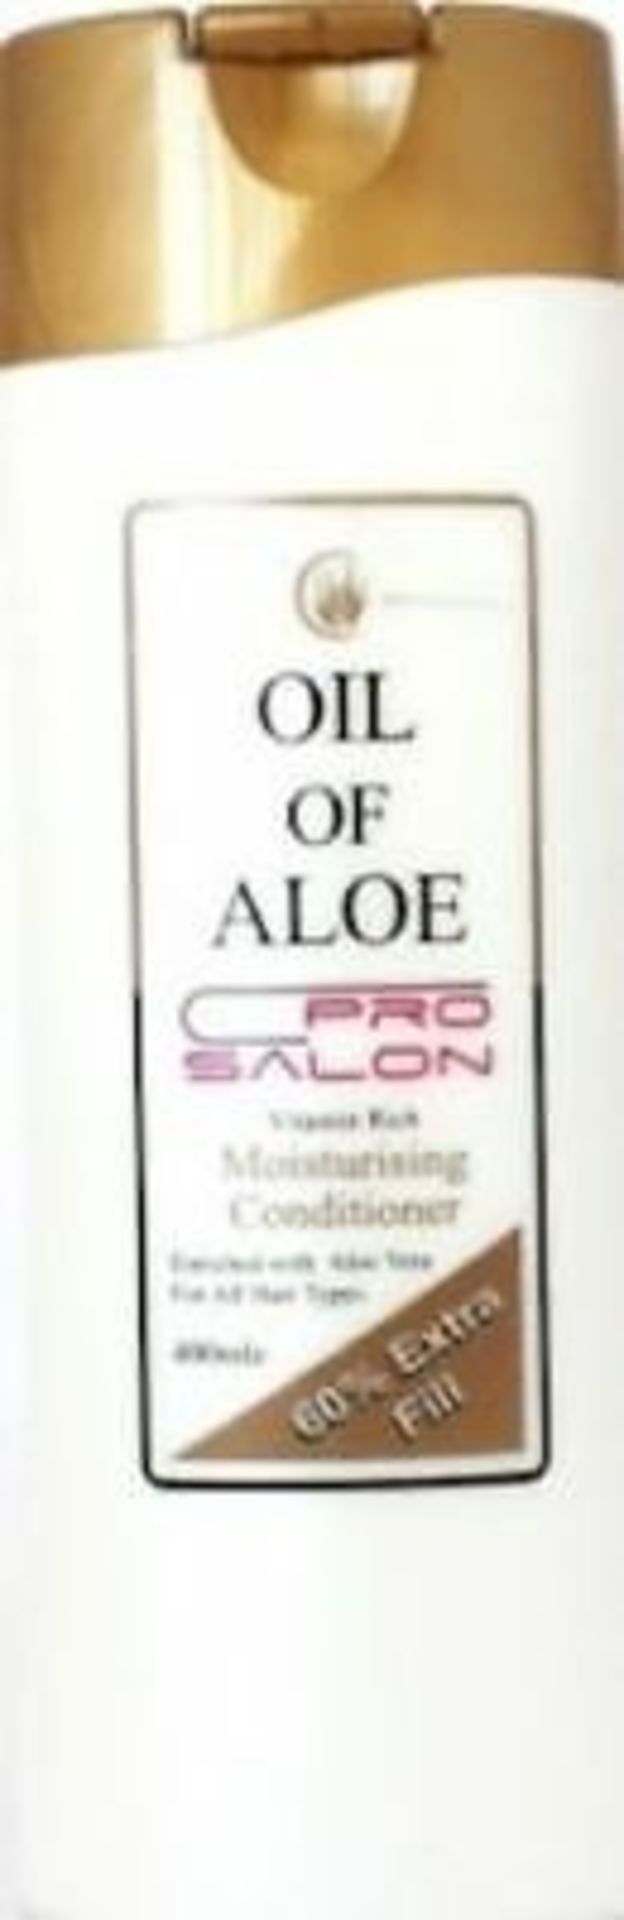 12 x Oil of Aloe Salon Pro Moisturisring Conditioner 400 ML